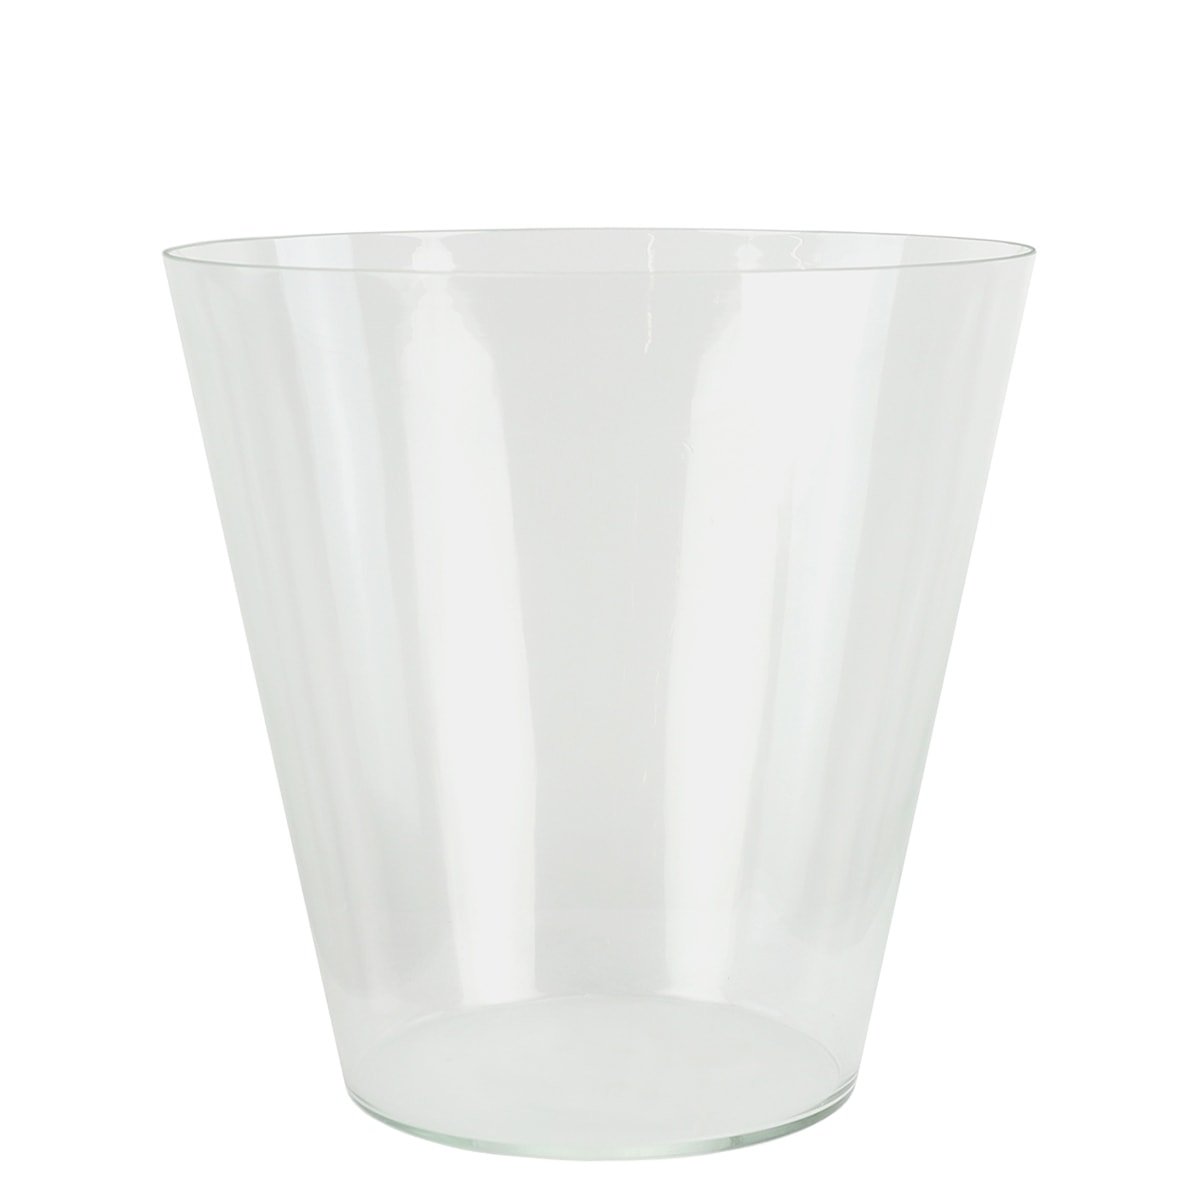 Klares glas laterne rund K2670 - 30 cm